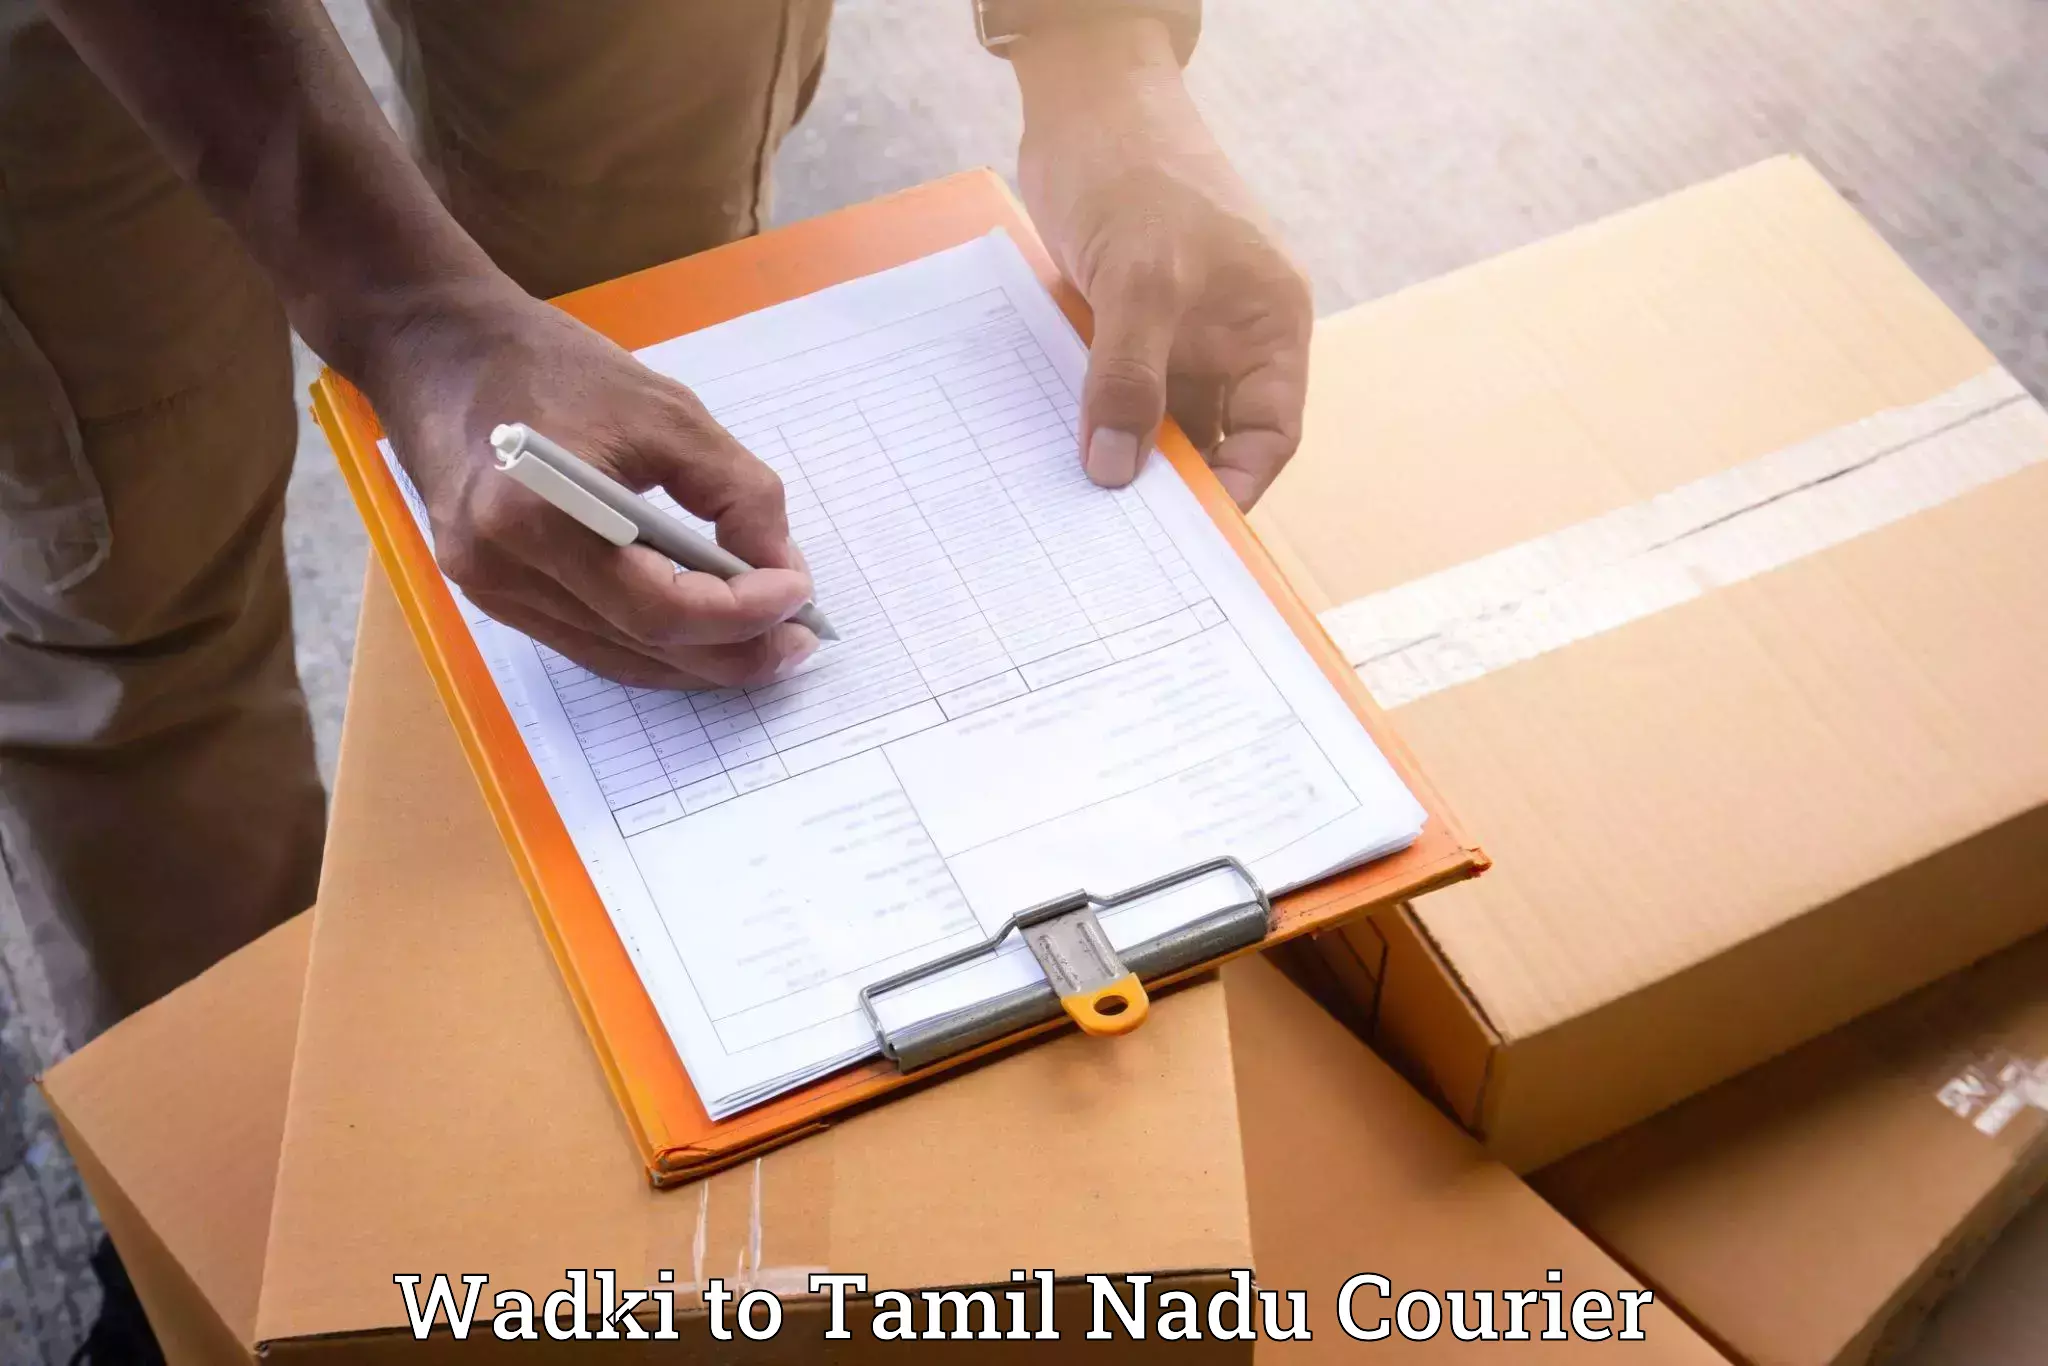 Professional furniture movers Wadki to Harur